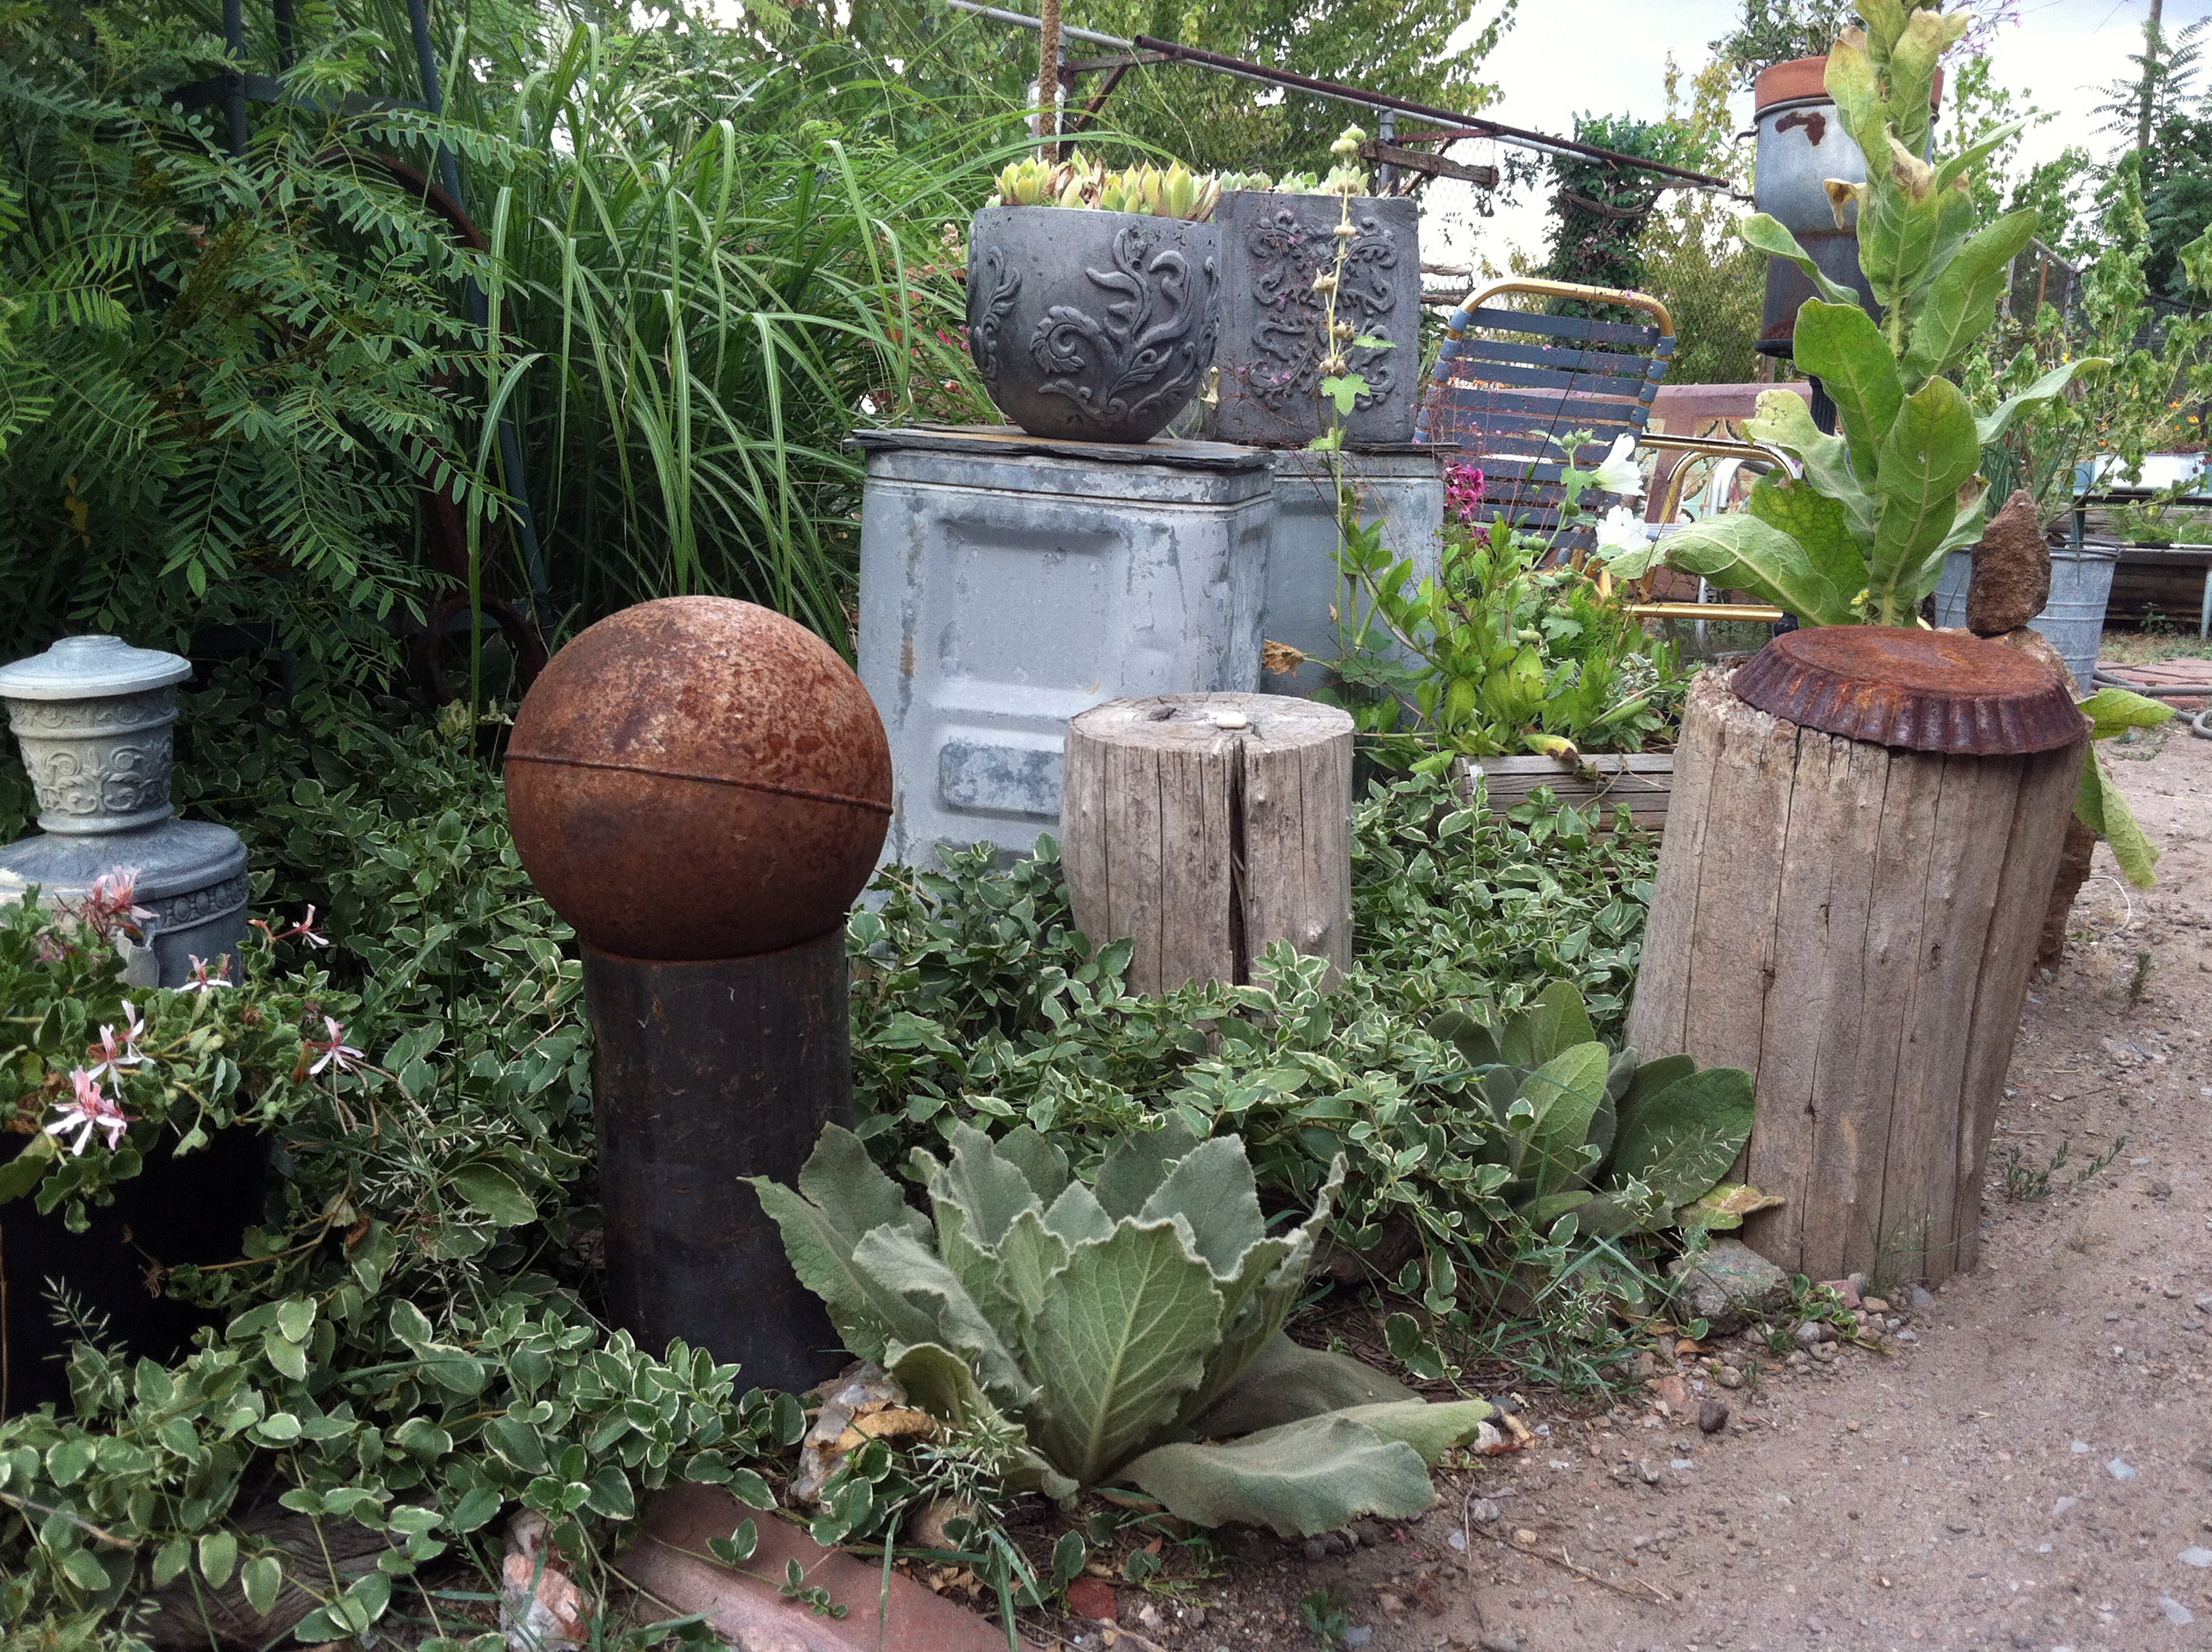 An Industrial Found-Object Garden Delights! More Fun Ideas 